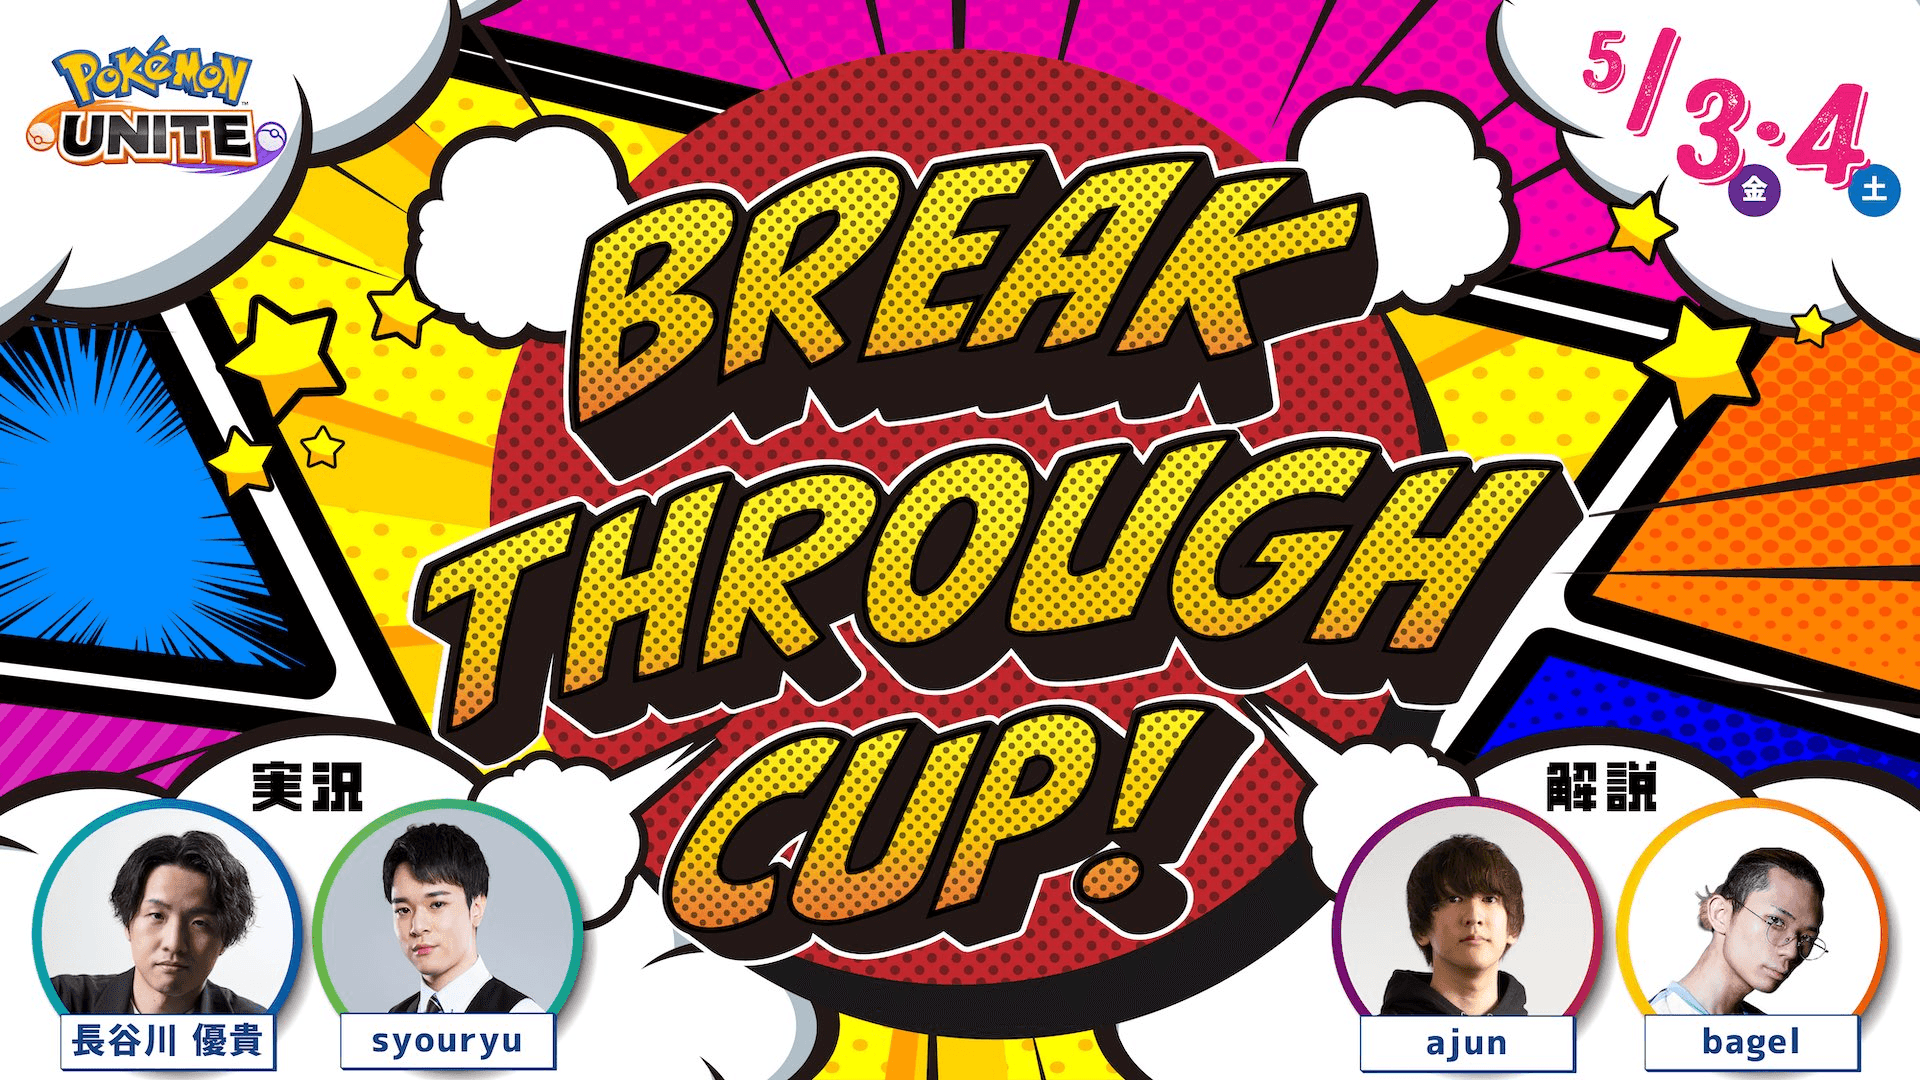 BREAK THROUGH CUP! feature image